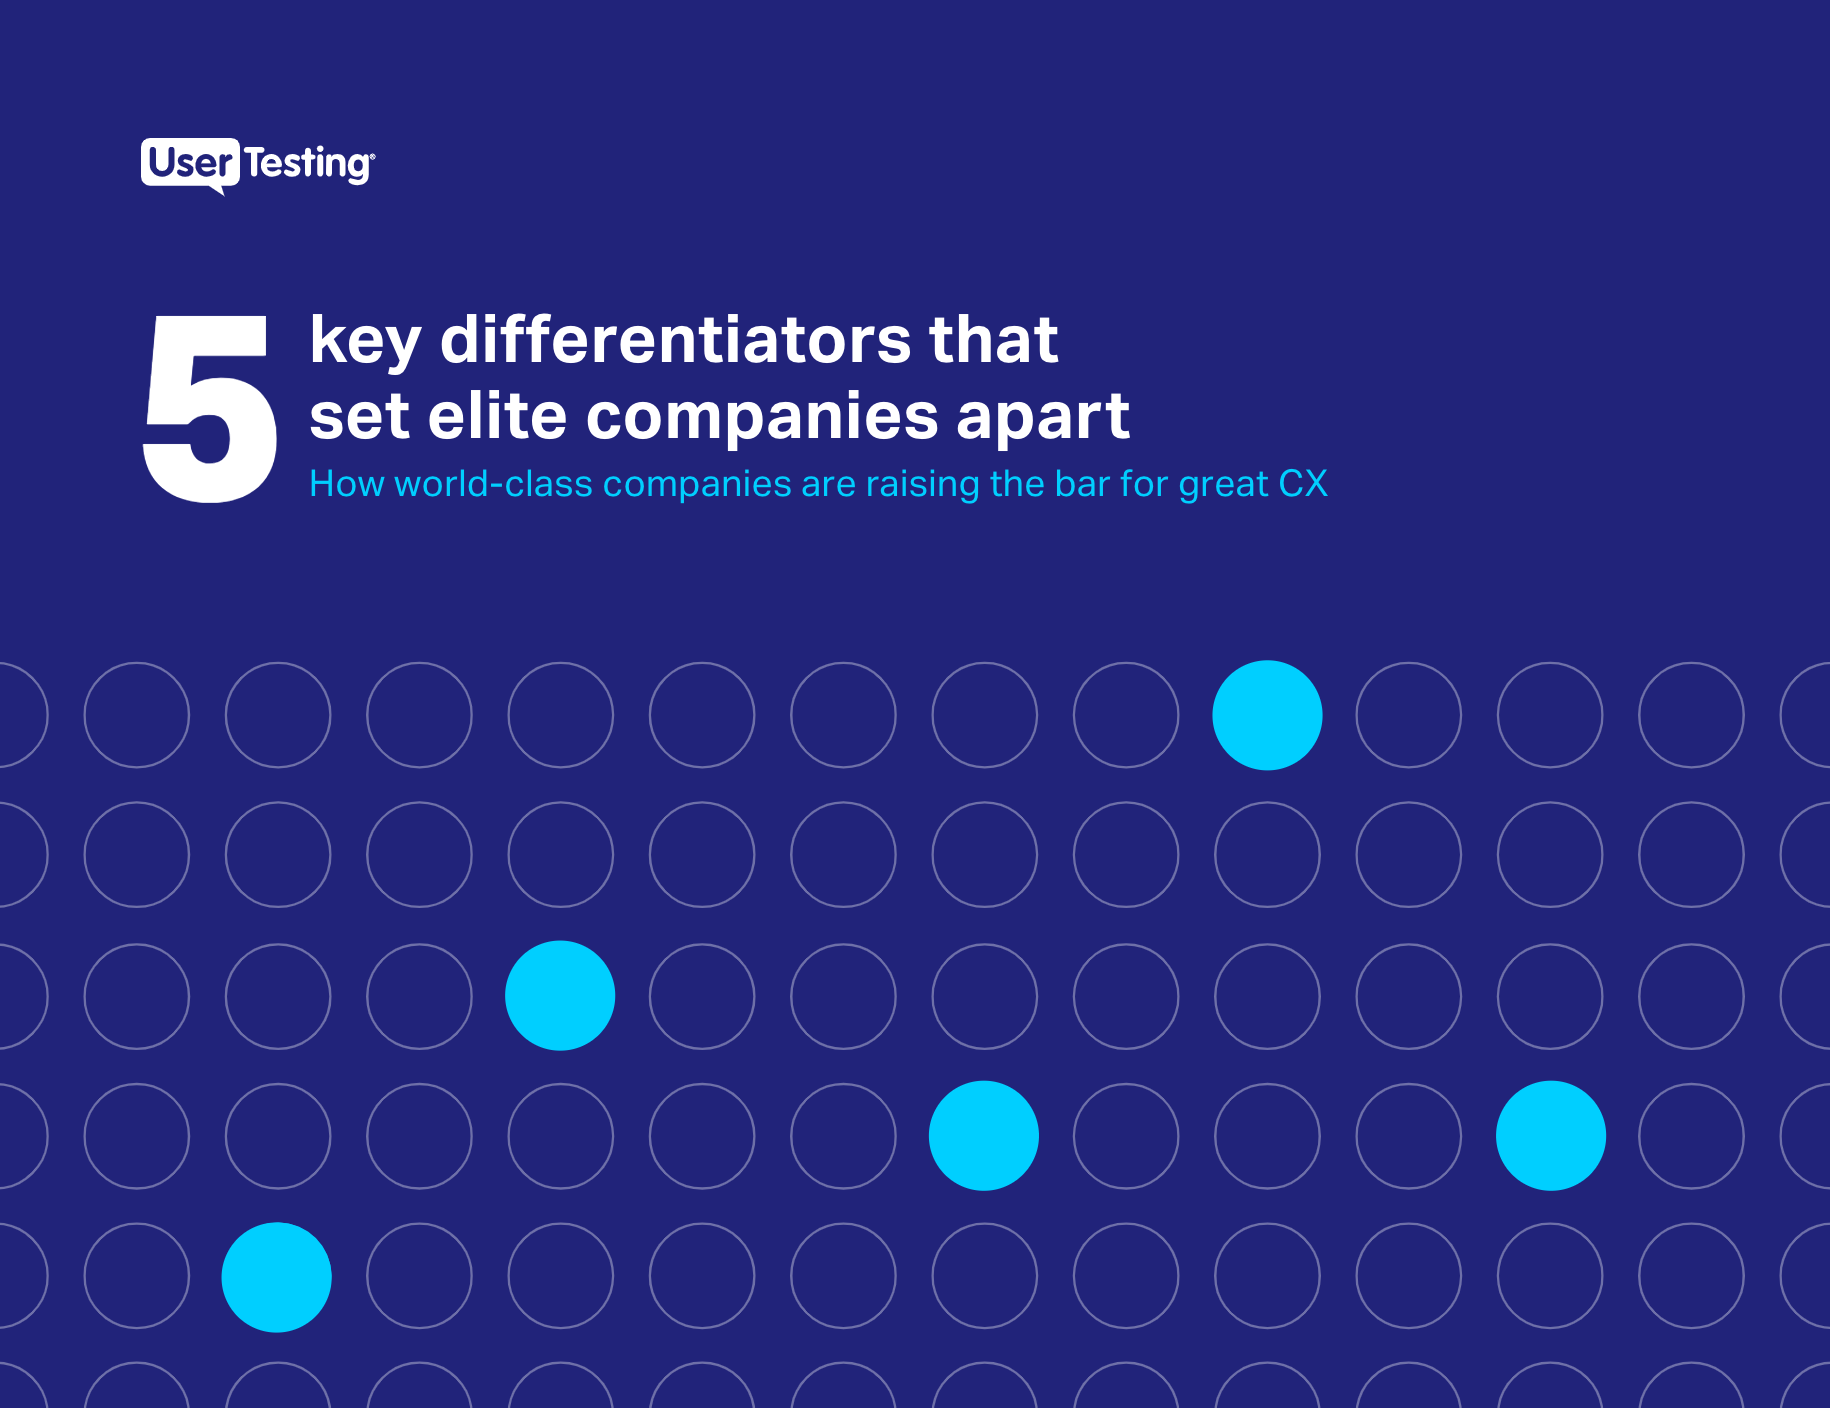 5 key differentiators that set elite companies apart